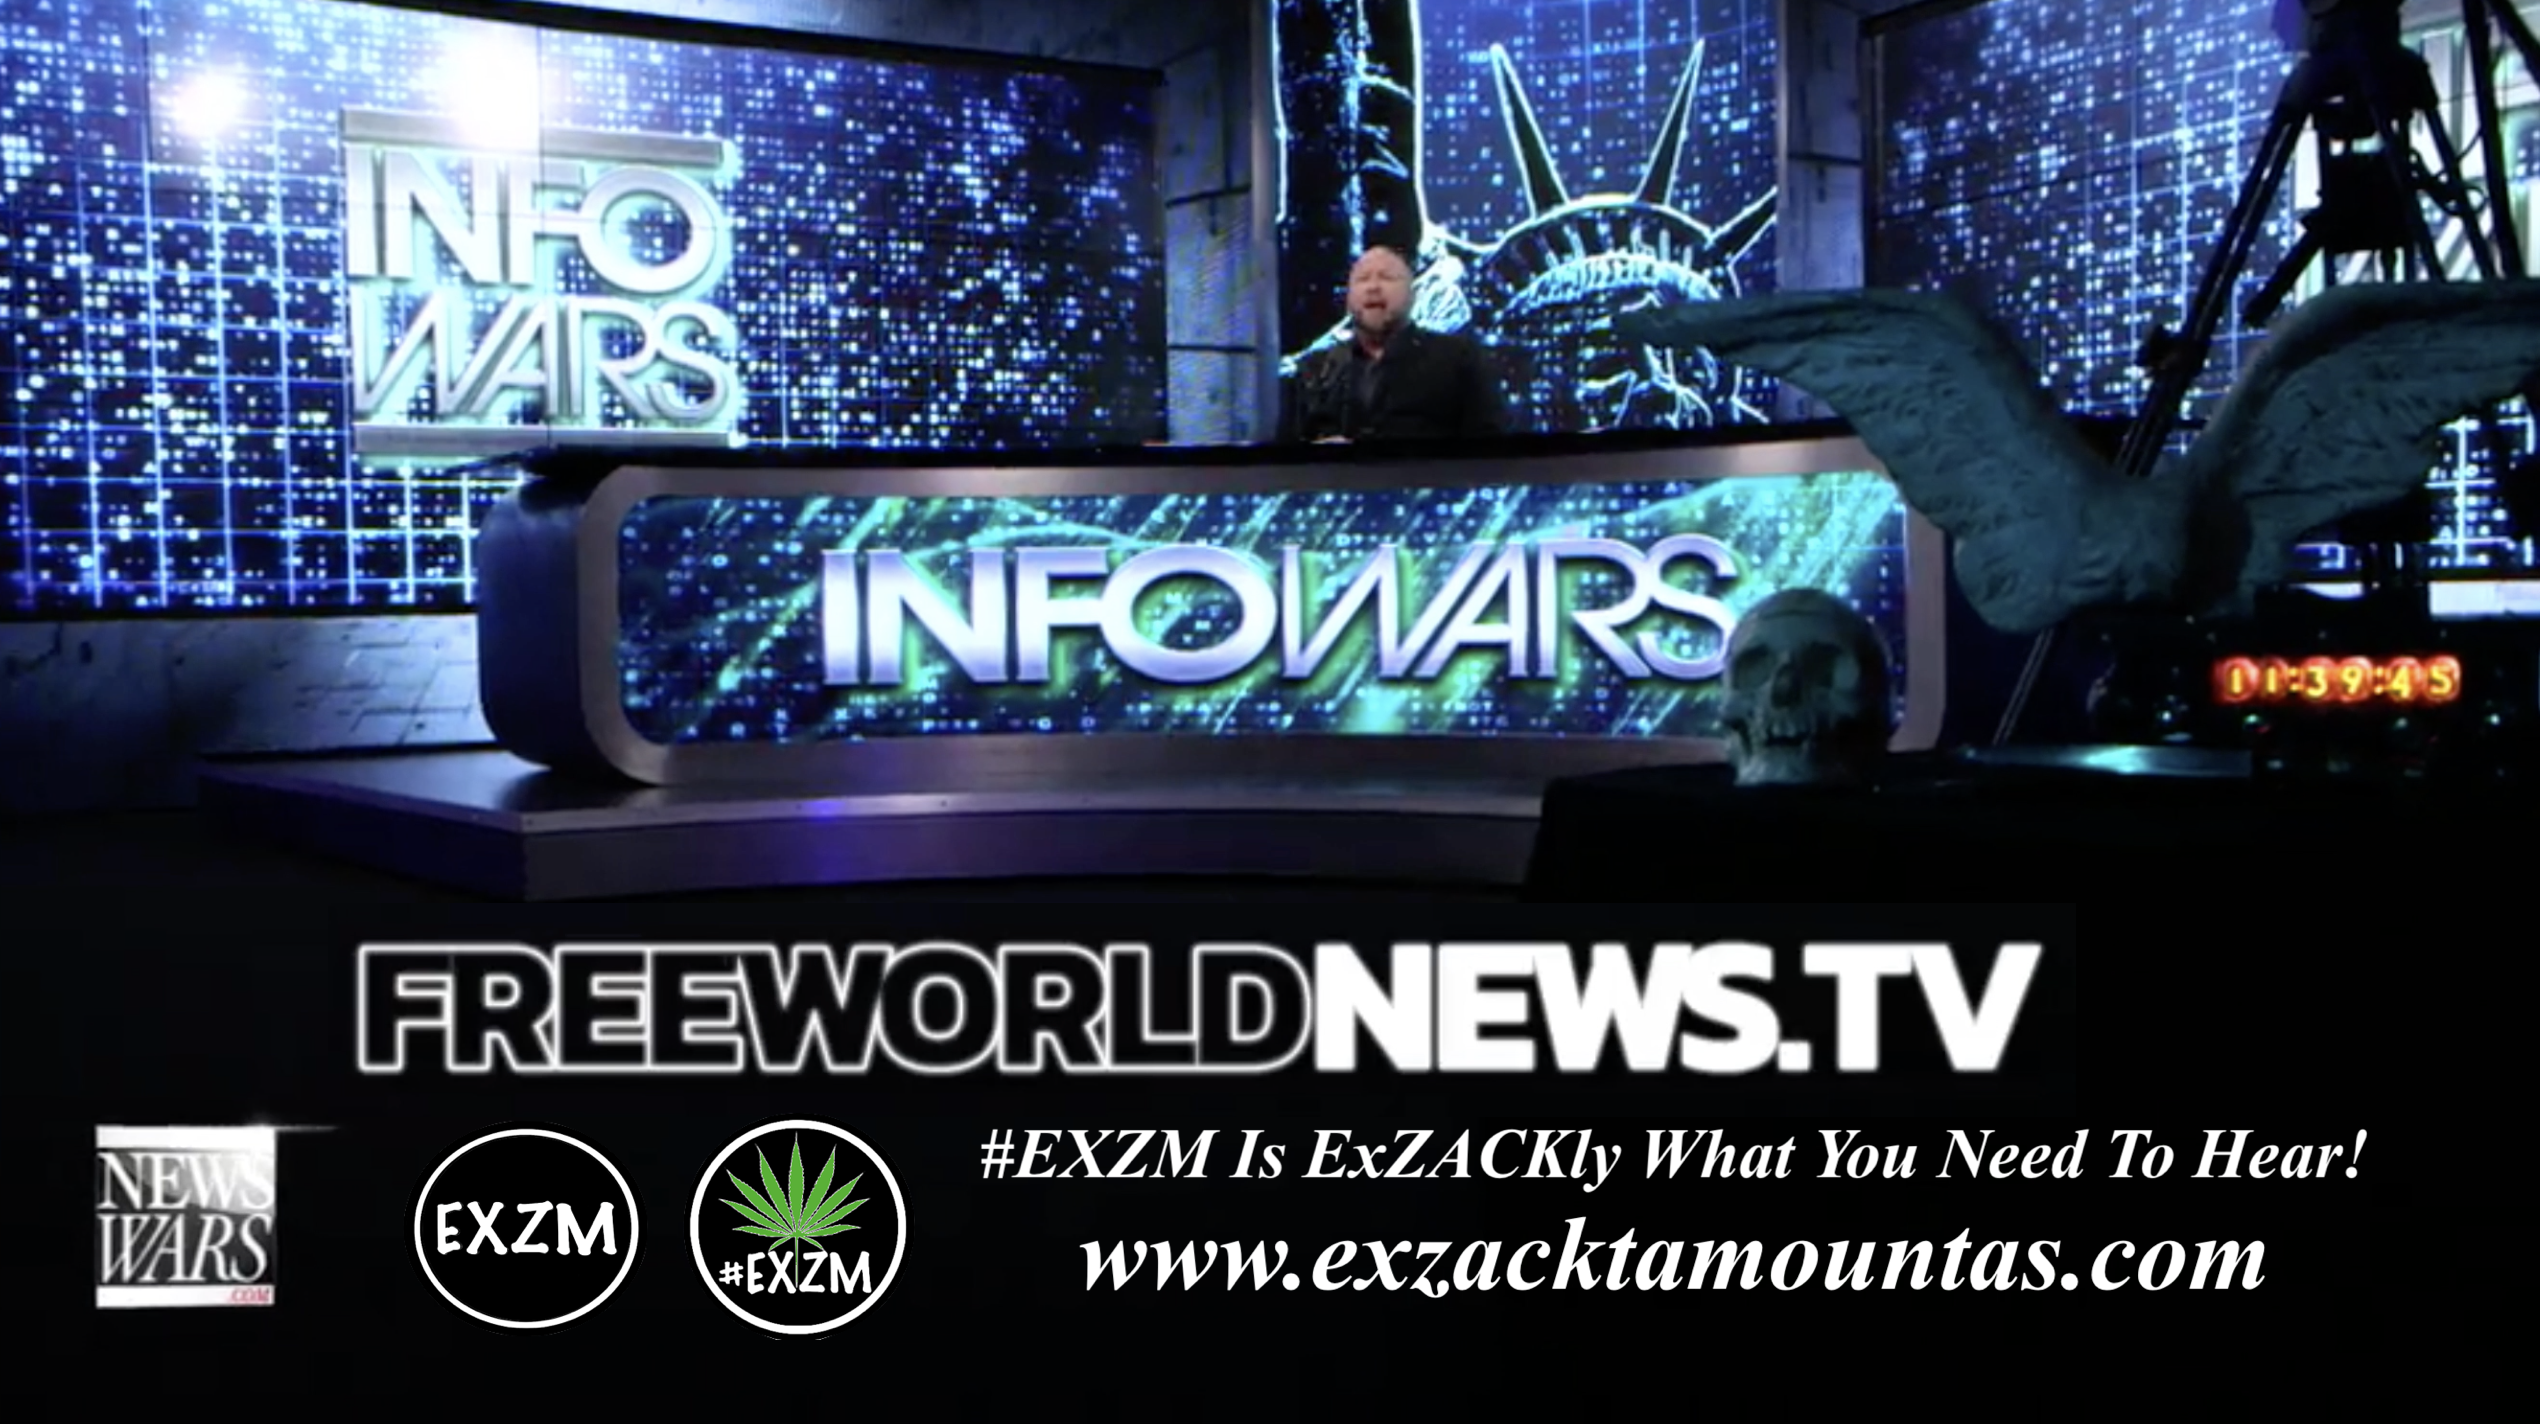 Alex Jones Live In Infowars Studio Human Skull Angel Wings Dagger Free World News TV EXZM Zack Mount June 8th 2021 copy